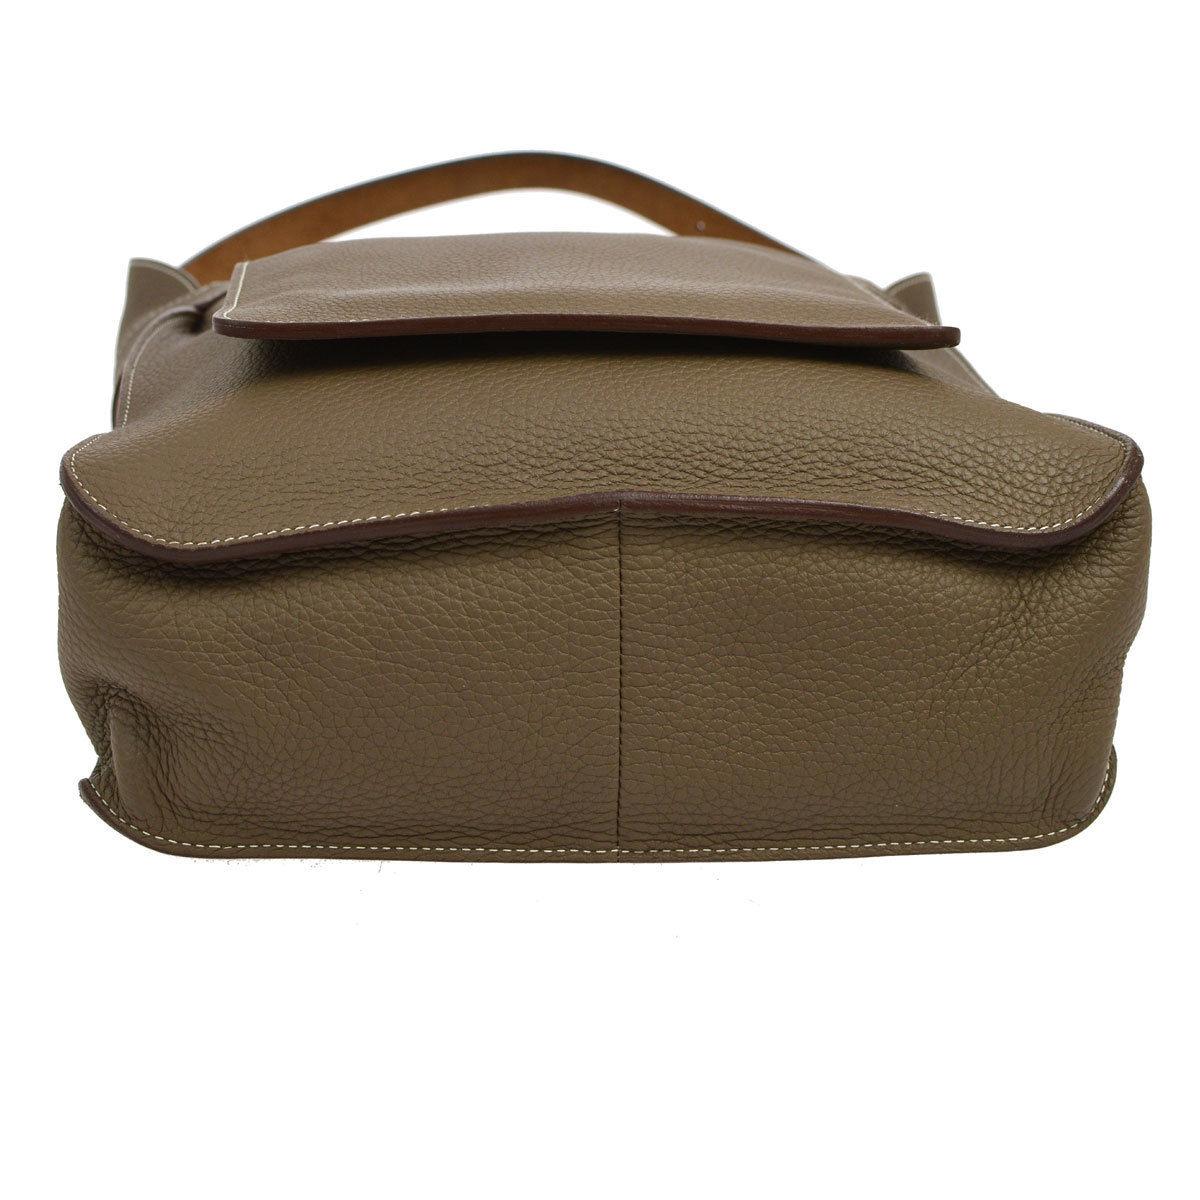 Brown Hermes Leather Silver Buckle Carryall Top Handle Crossbody Shoulder Bag 